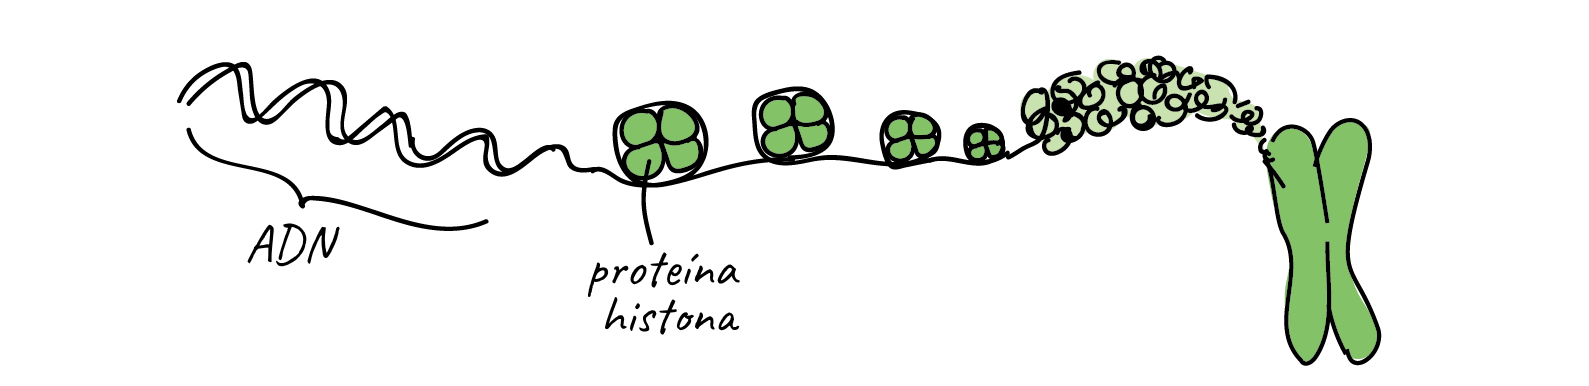 Cromatina Y Cromosoma